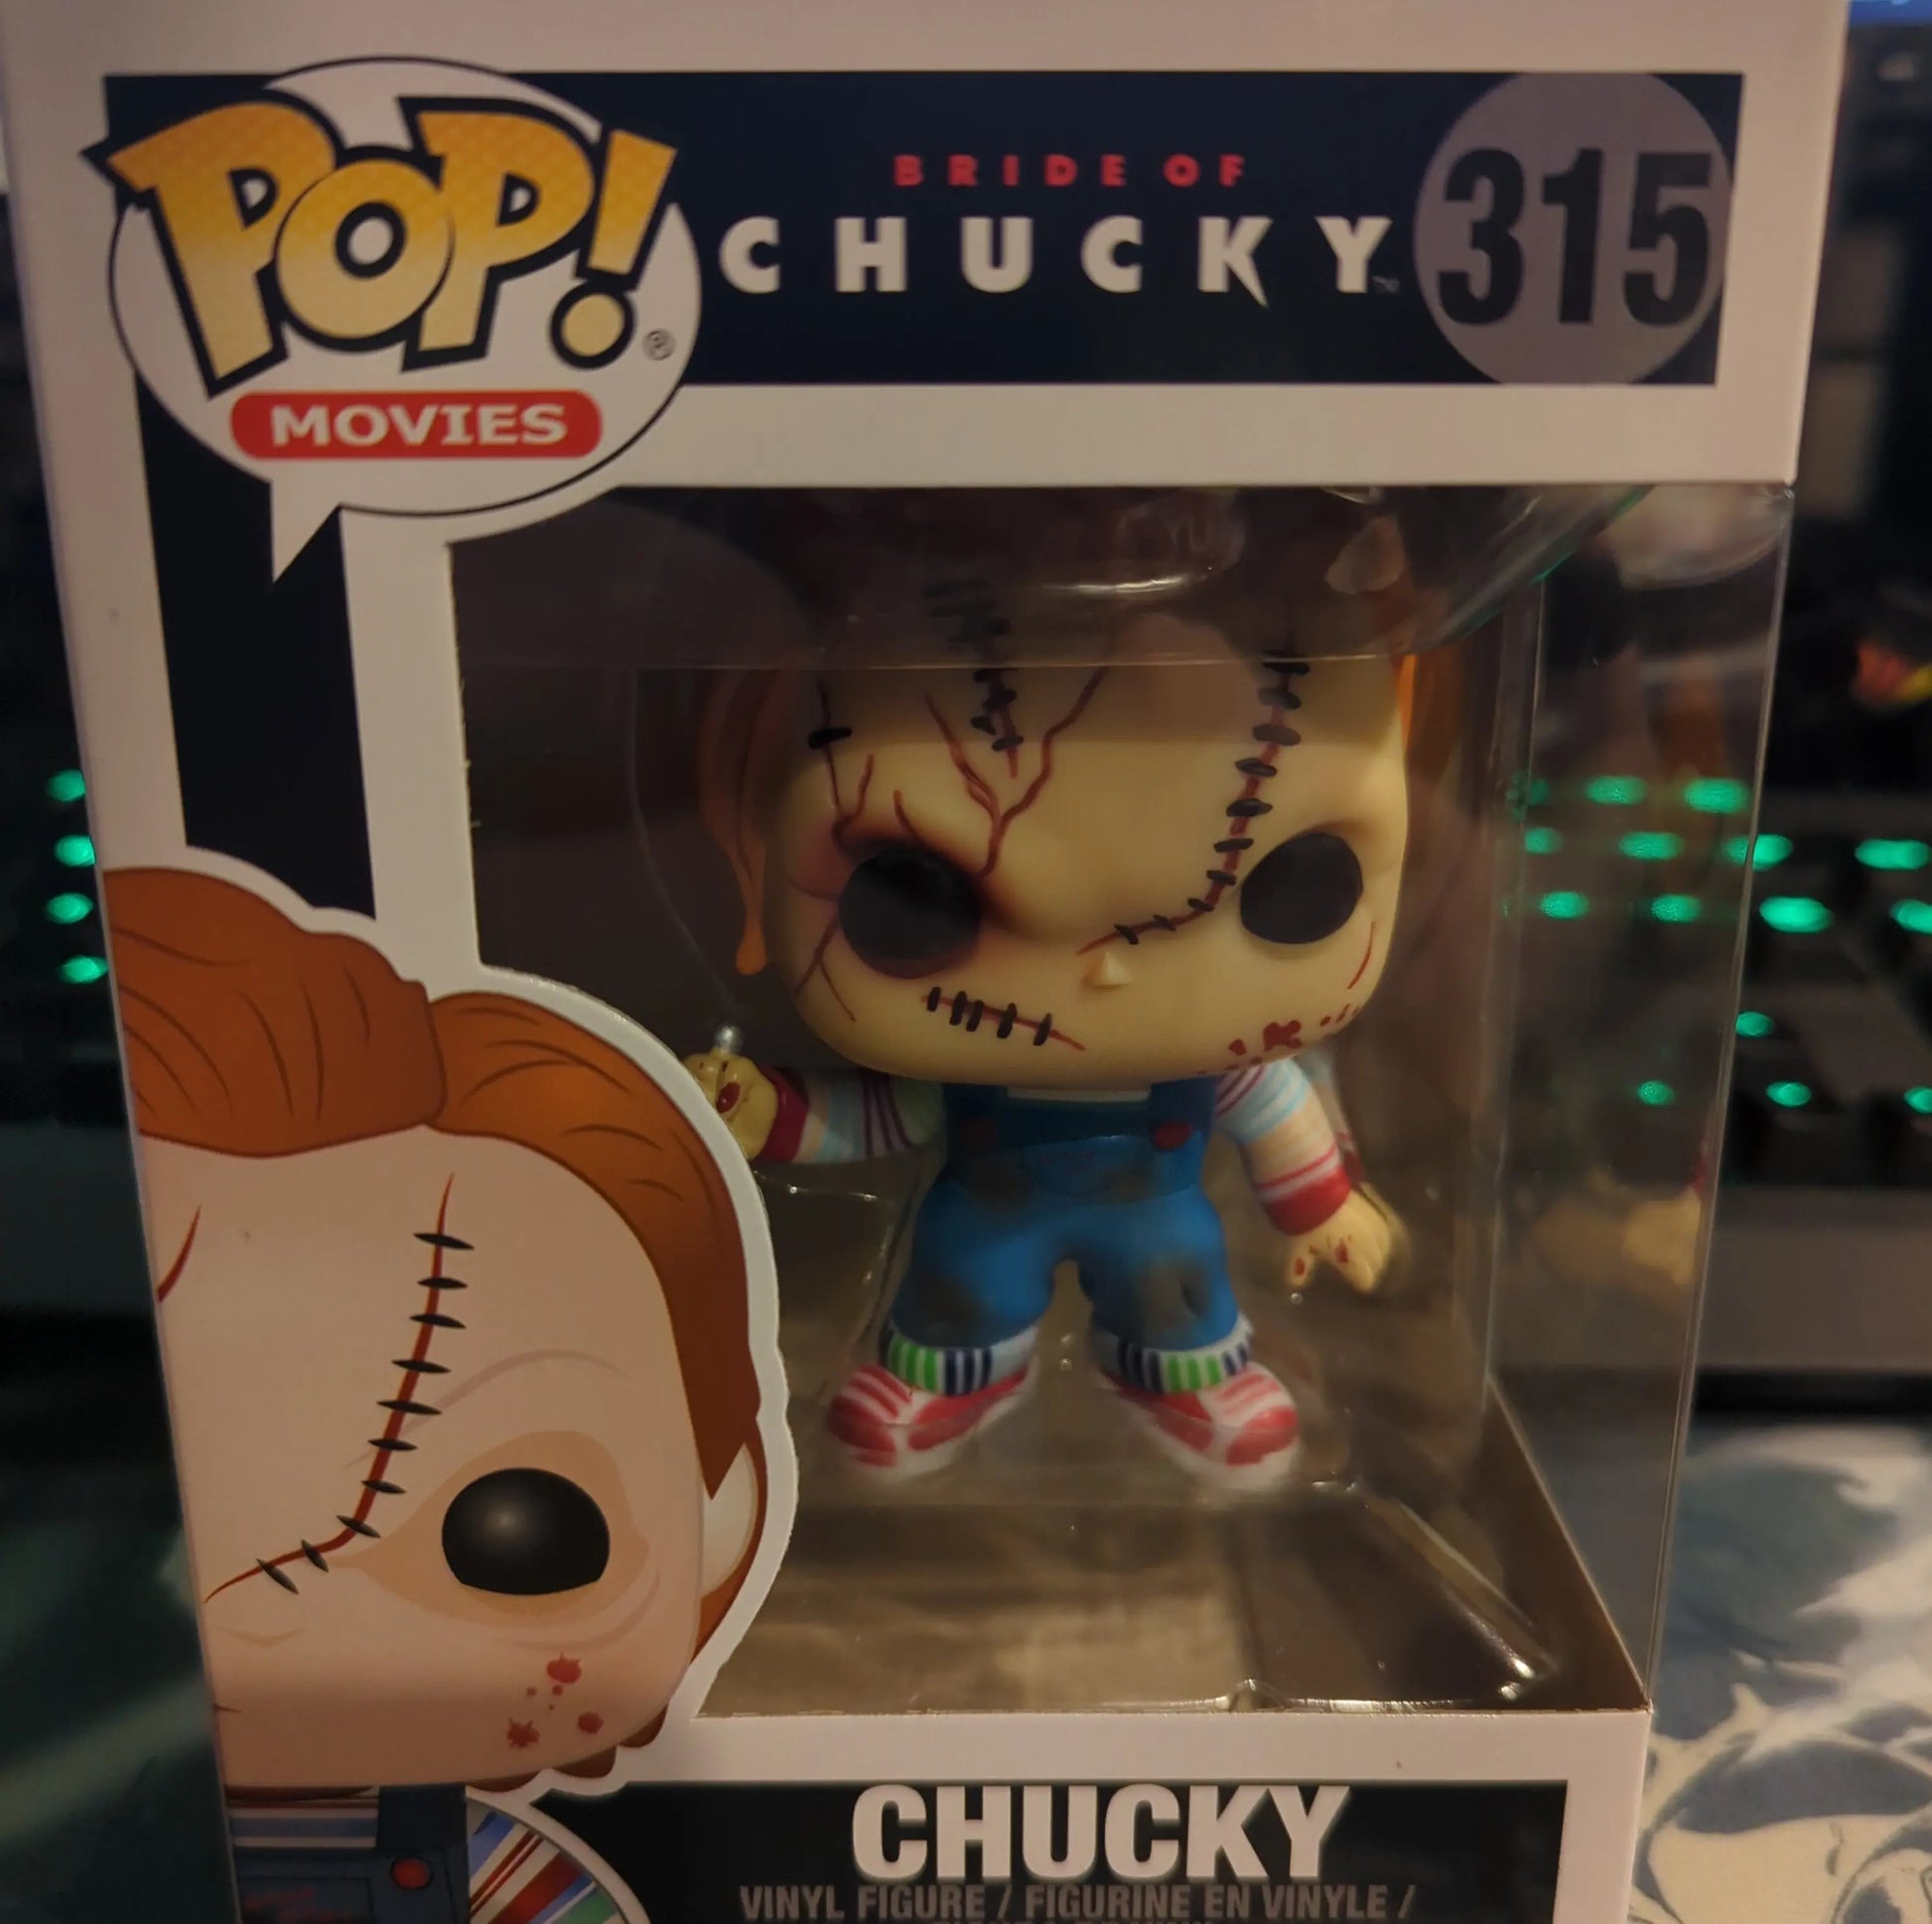 FUNKO POP VINYL CHUCKY Bride of Chucky 315 Horror - FRENLY BRICKS - Open 7 Days